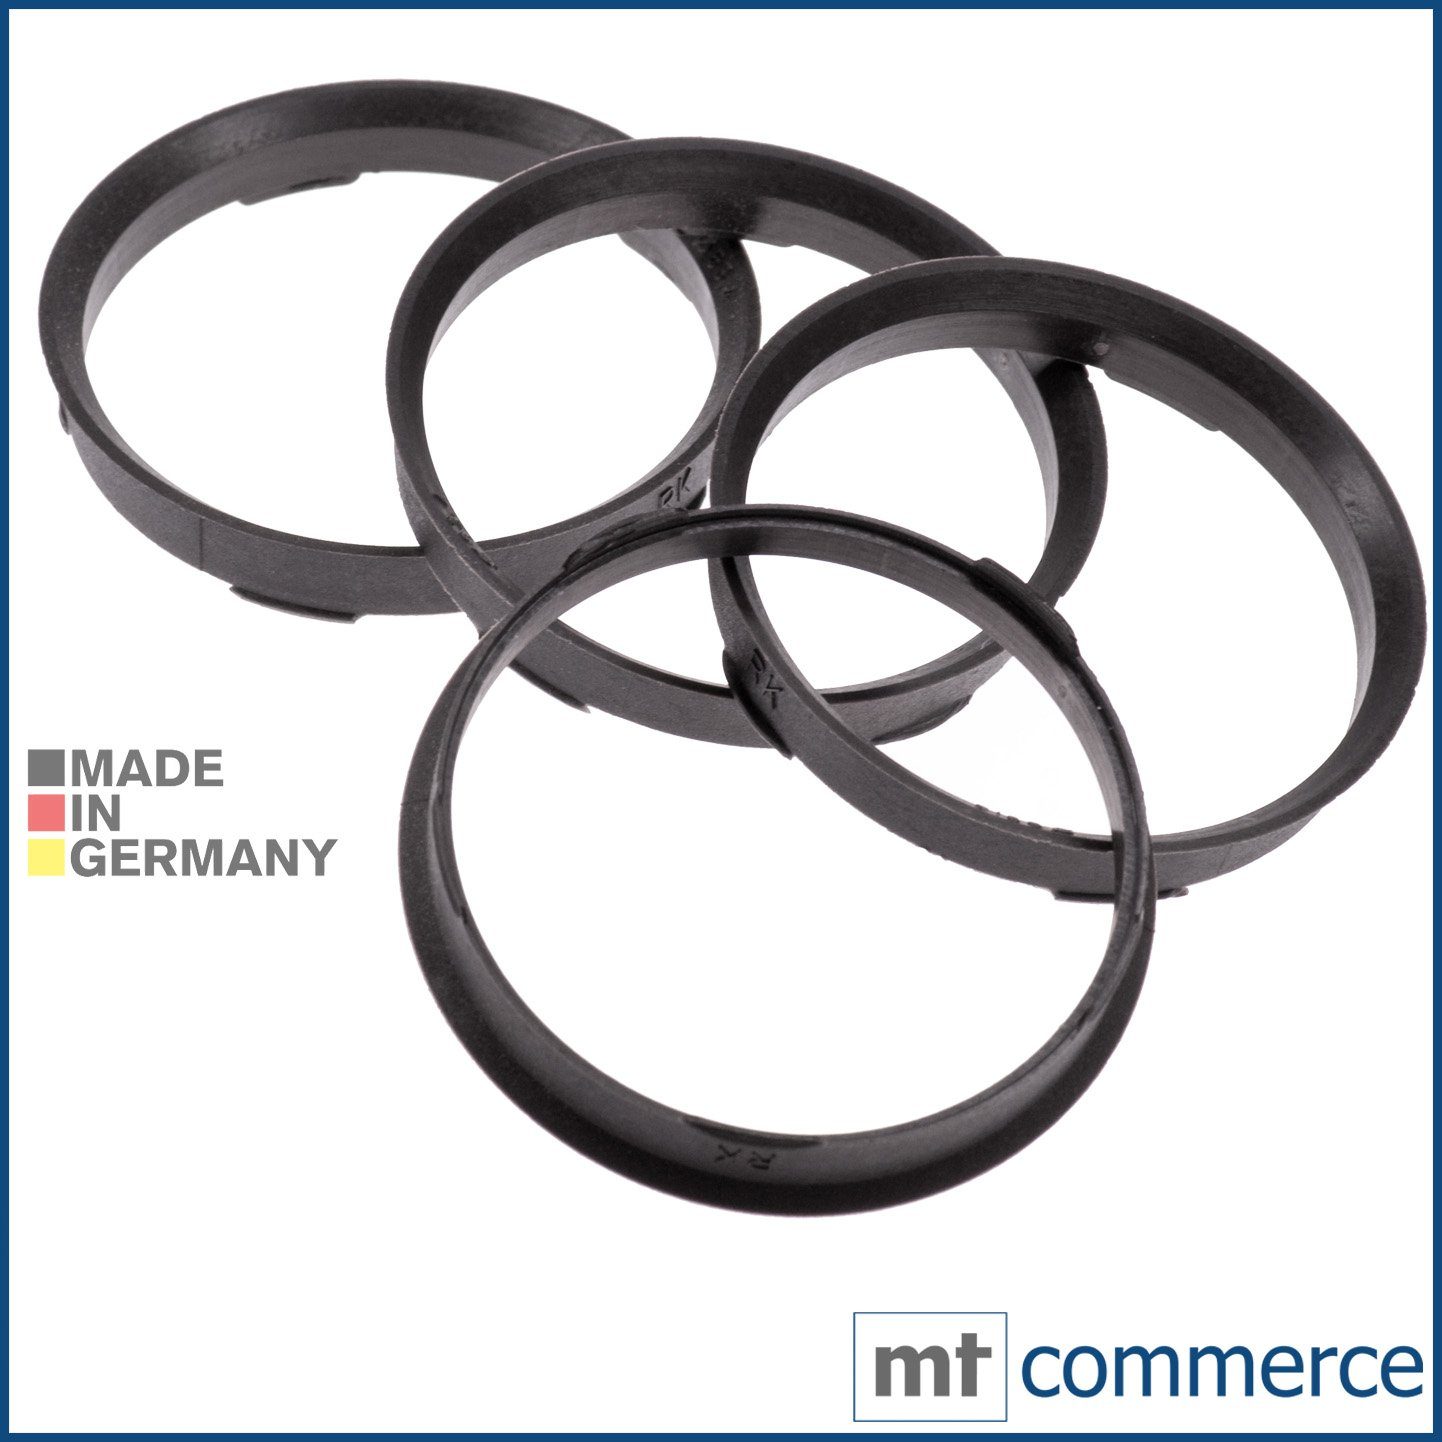 RKC Reifenstift 4X Zentrierringe Dunkelbraun Felgen Ringe Made in Germany, Maße: 67,0 x 63,4 mm